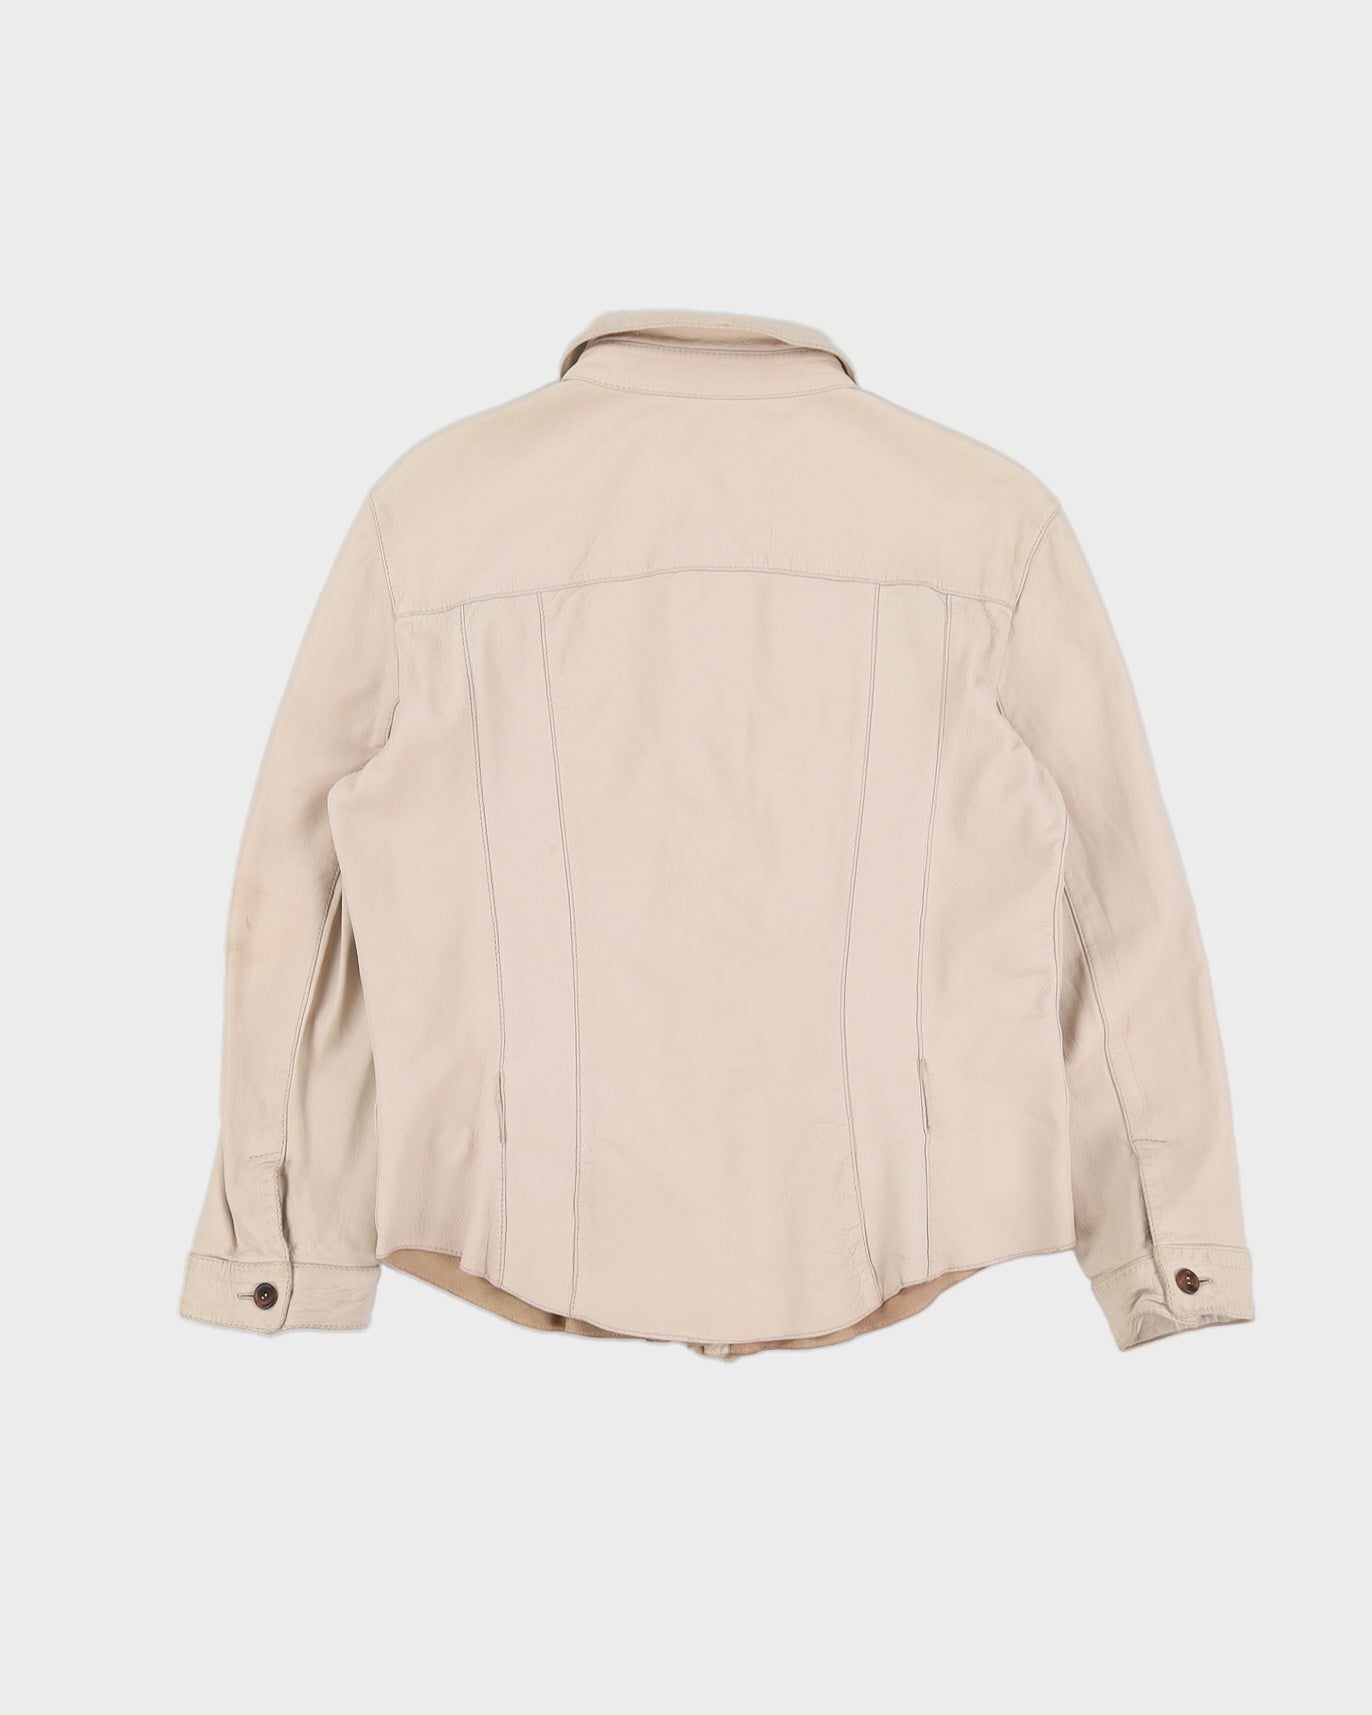 Prada Beige Leather Shirt Jacket - S